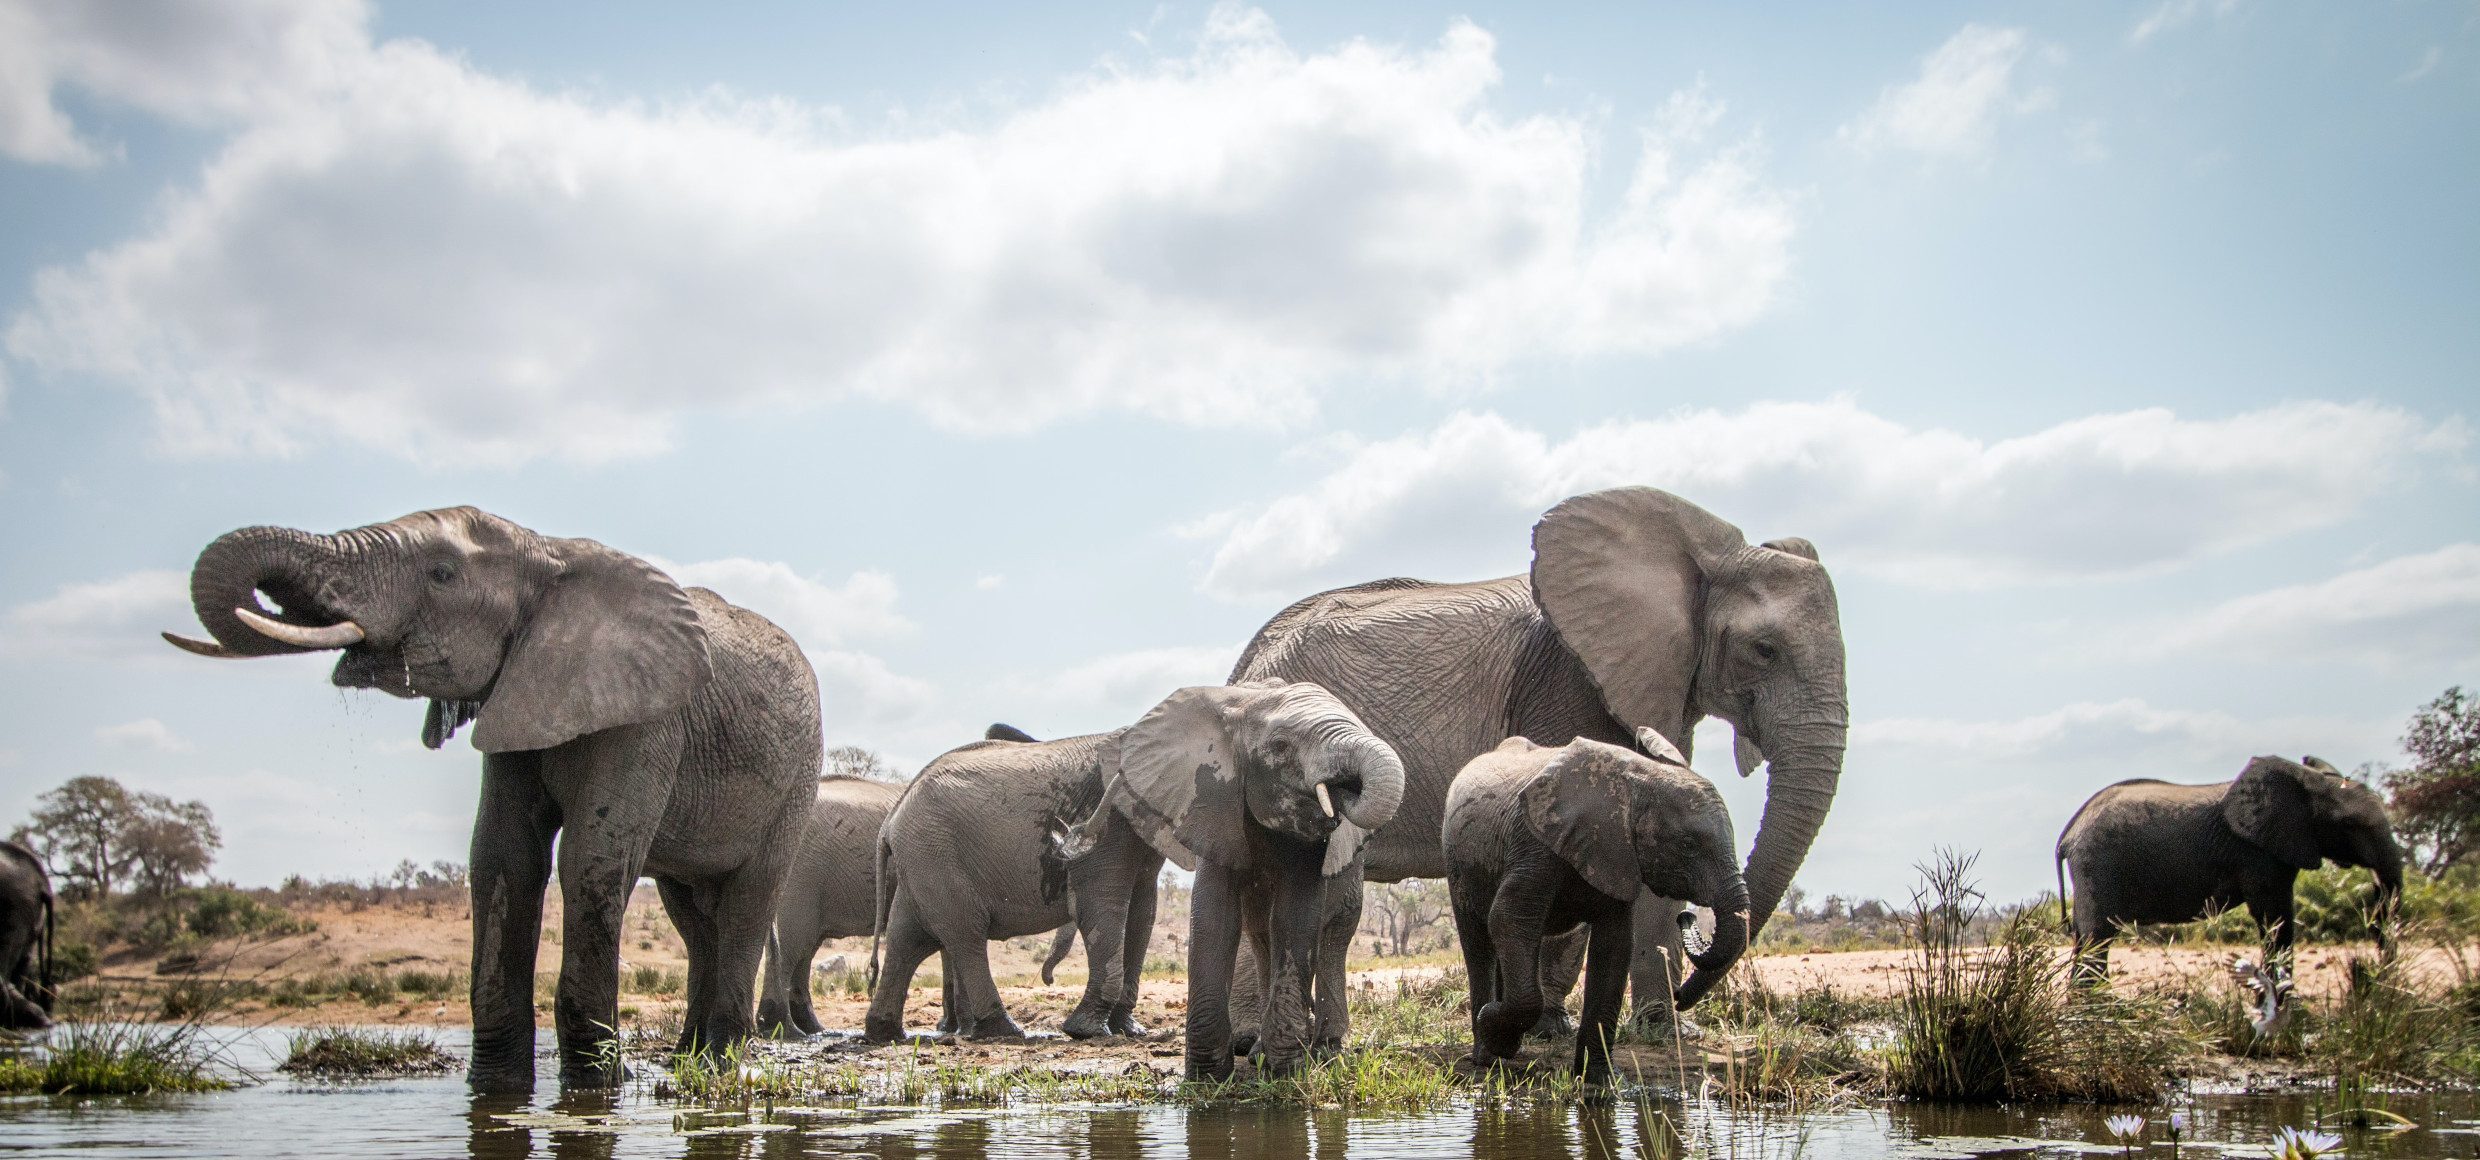 Elefanten-im-Krüger-Nationalpark-Südafrika-(c)simoneemanphoto-stock.adobe.com-Lernidee-erweiterte-Lizenz_615-3